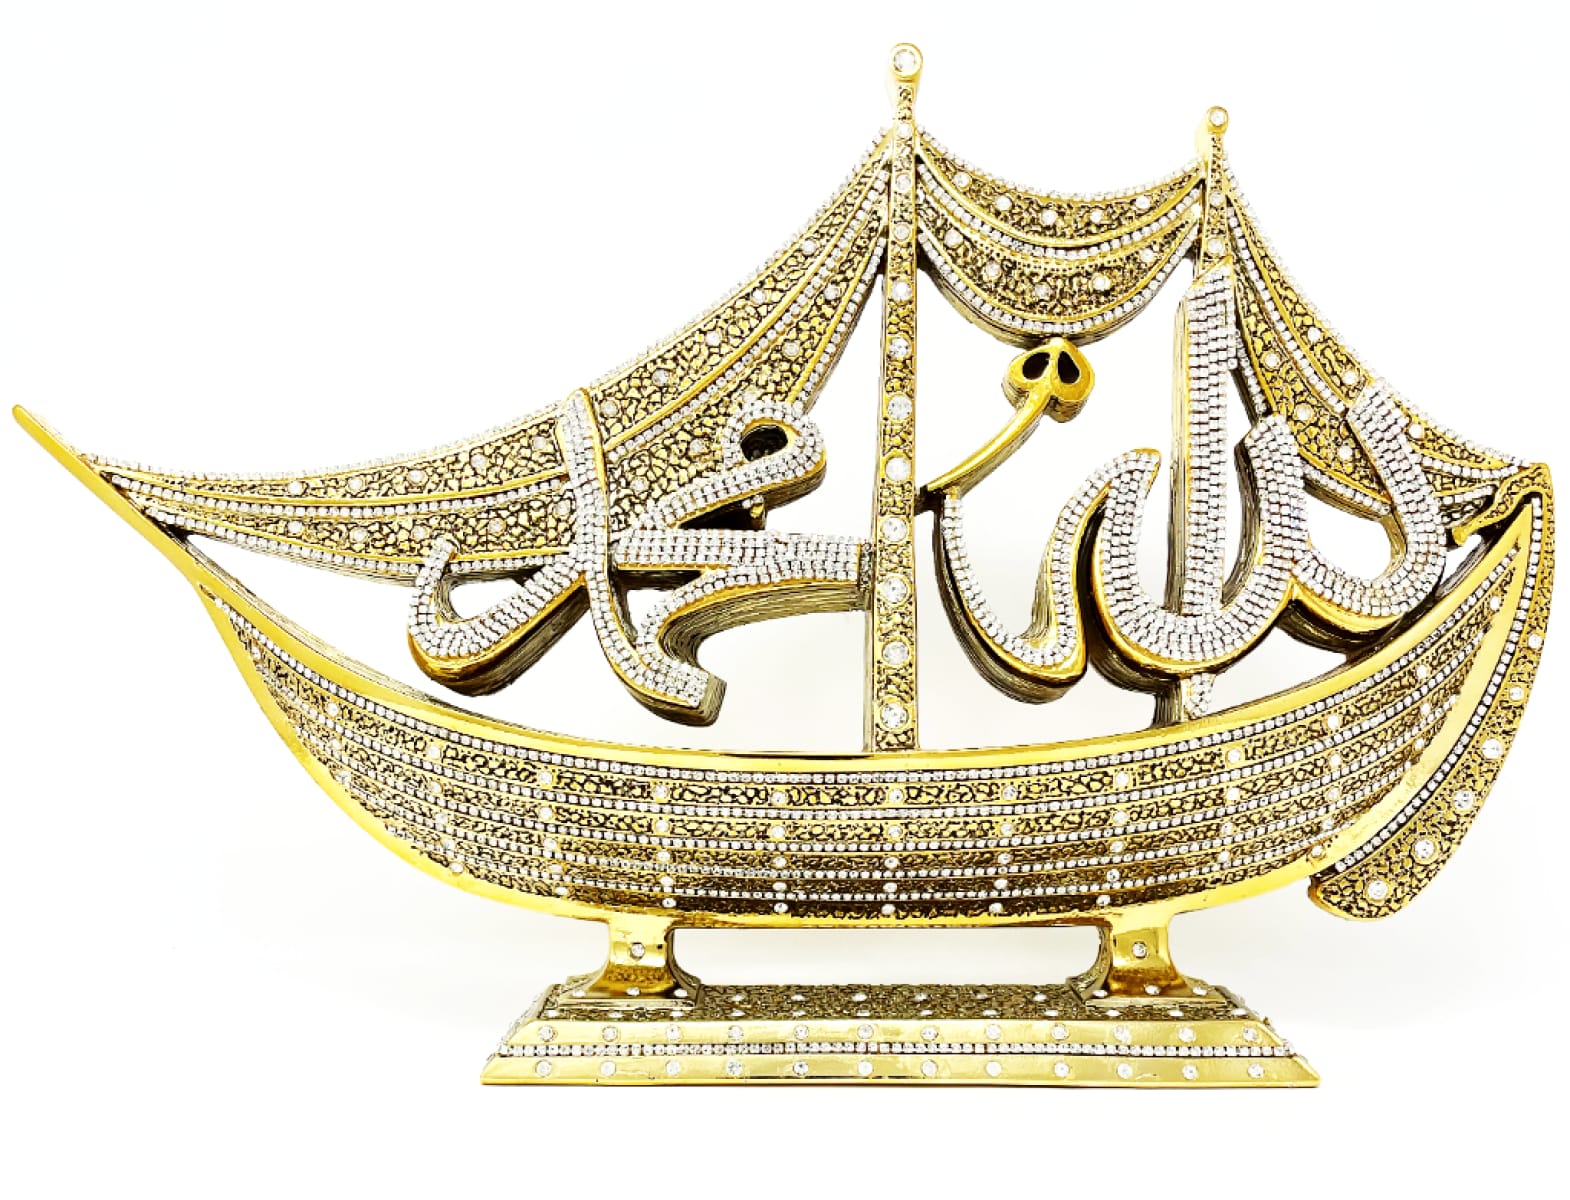 Allah Muhammad Sailboat - Gold - Sultan